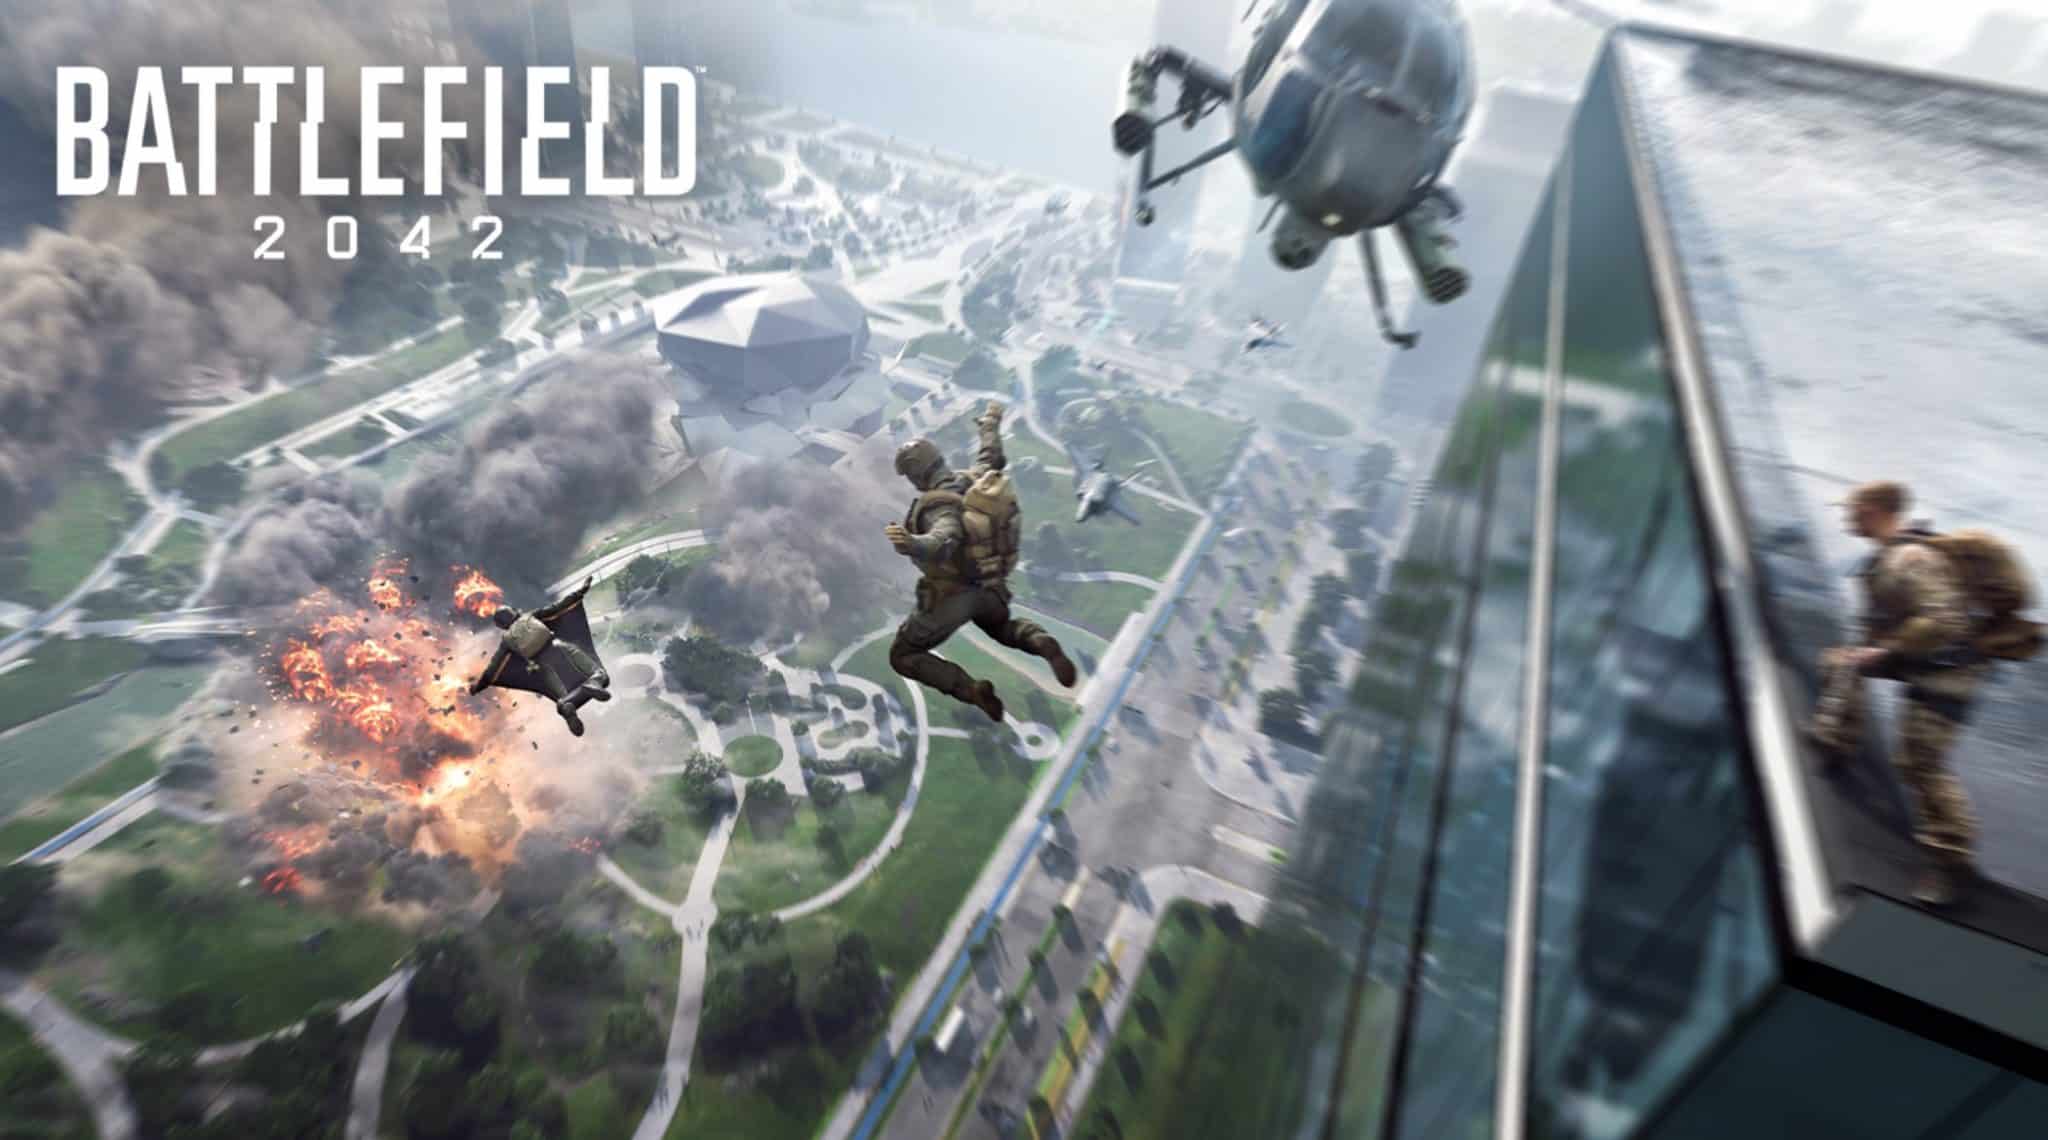 Battlefield 2042 to include crossplay between PC, Xbox Series X/S